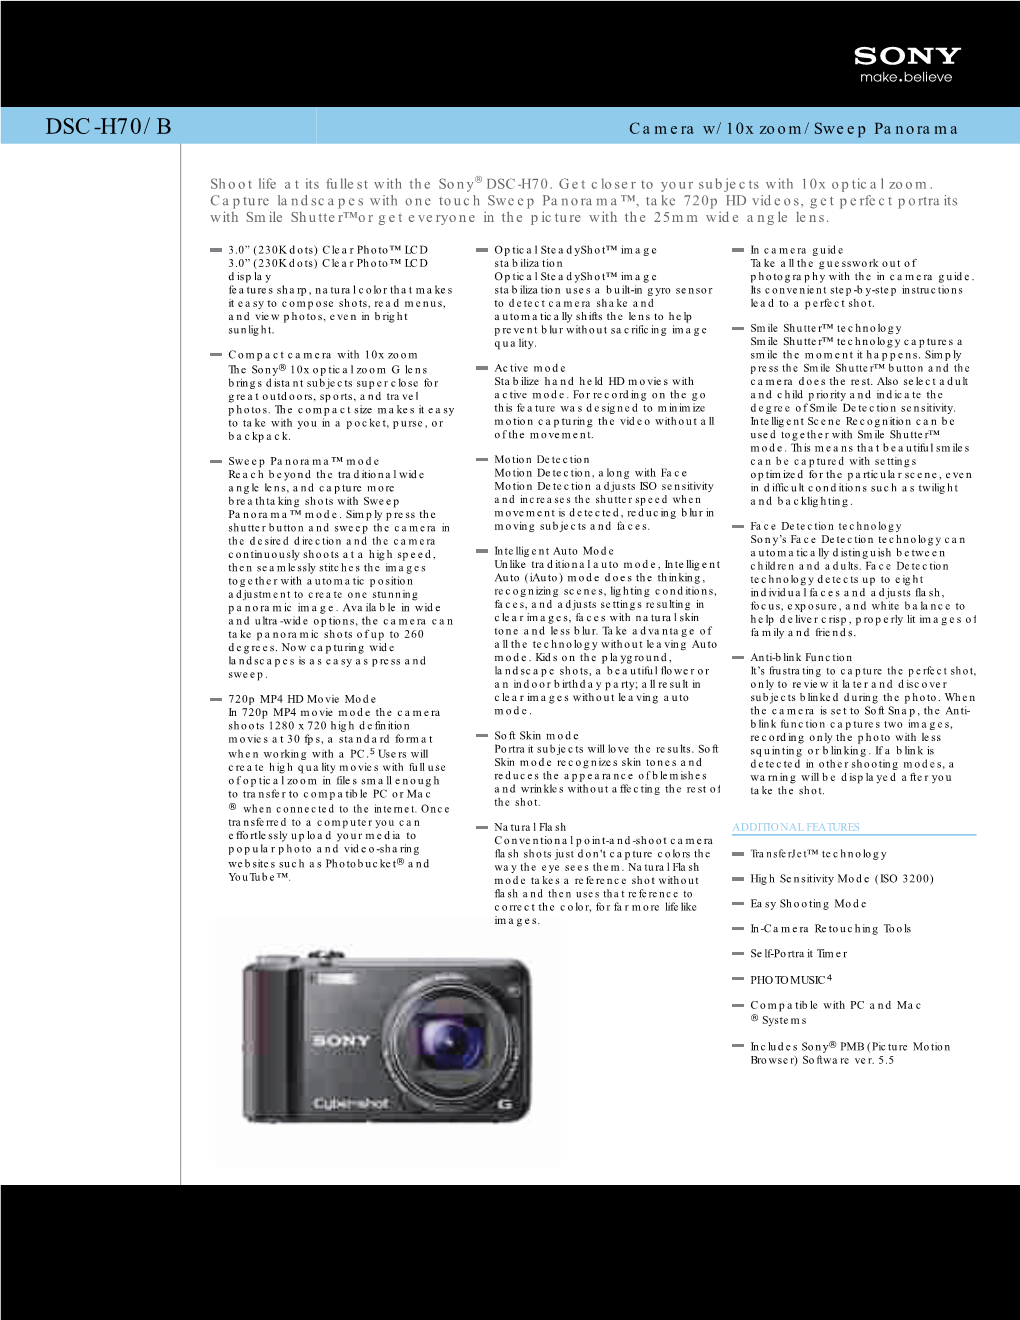 DSC-H70/B Camera W/10X Zoom/Sweep Panorama